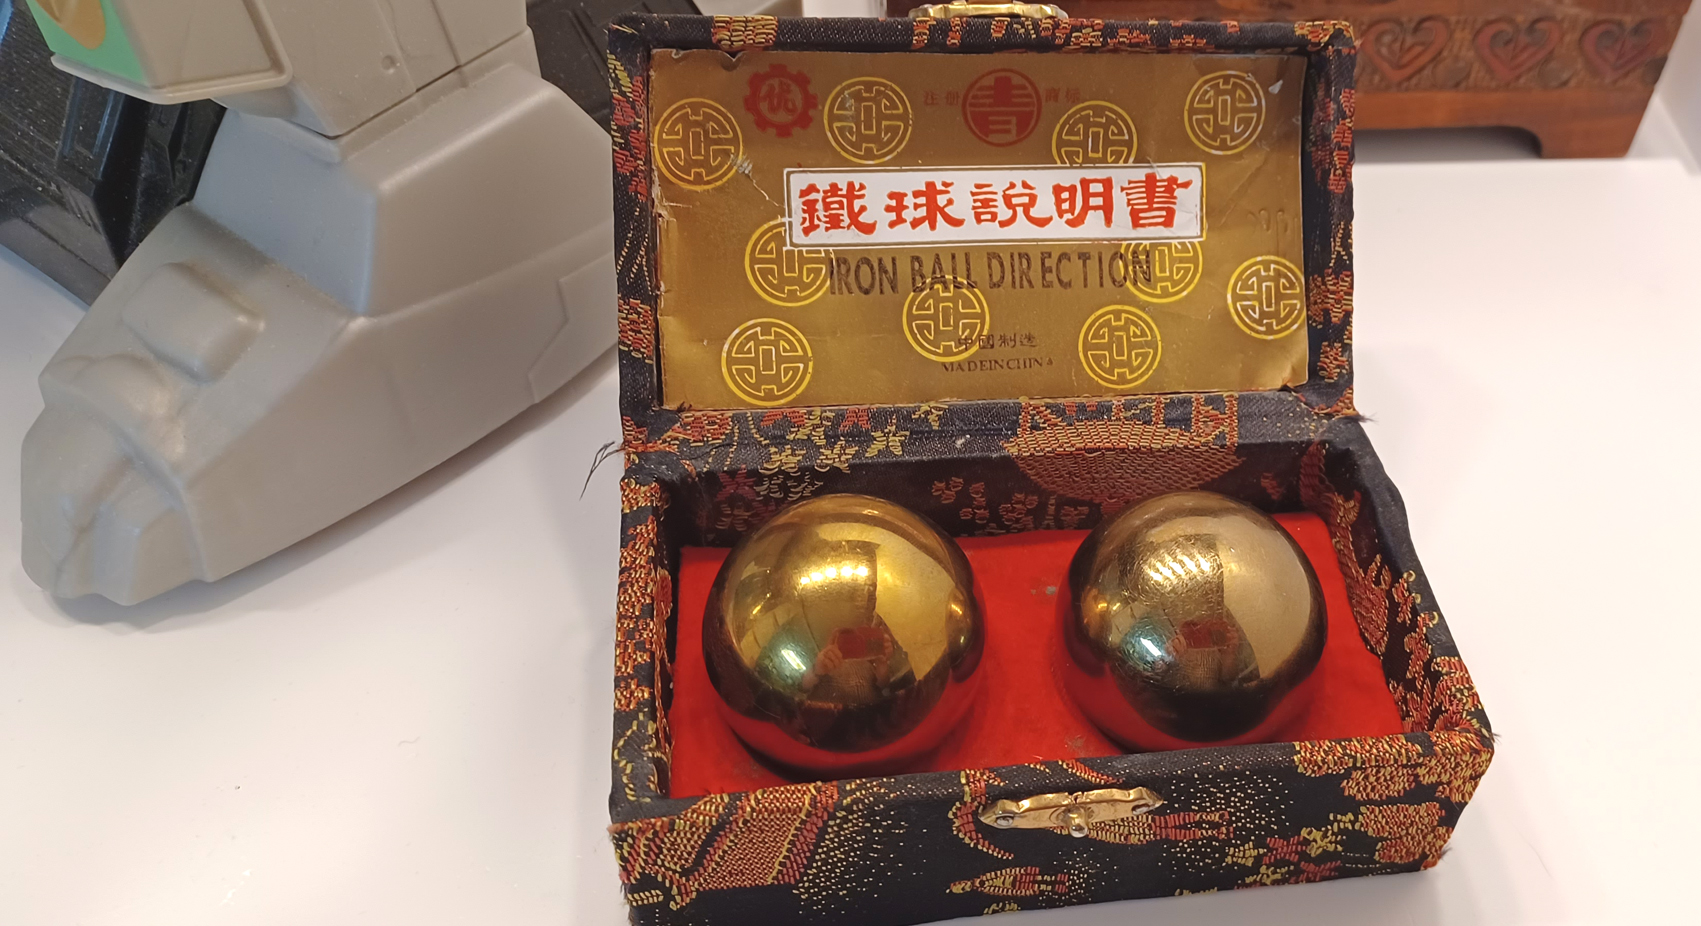 MATTEL POWER RANGERS DRAGONARD 15" TALL, ORIENTAL WOODEN BOX AND PAIR OF CHINESE IRON BALLS  - Image 2 of 2